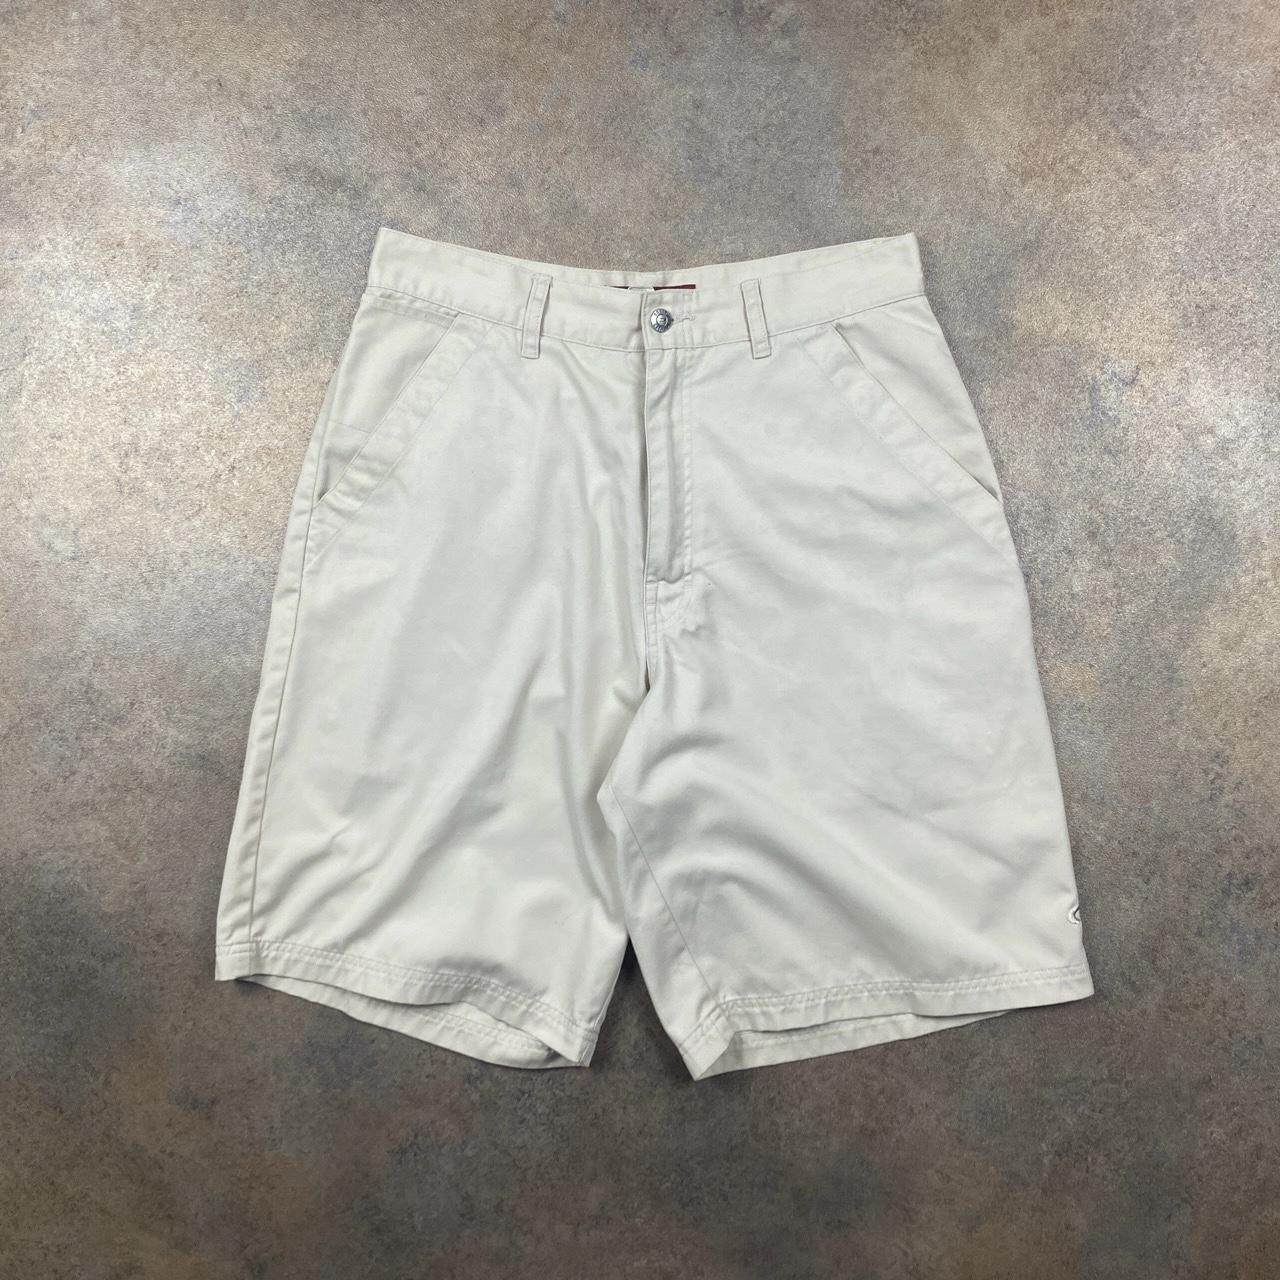 Oakley Baggy Shorts Cream colour, summer staple... - Depop